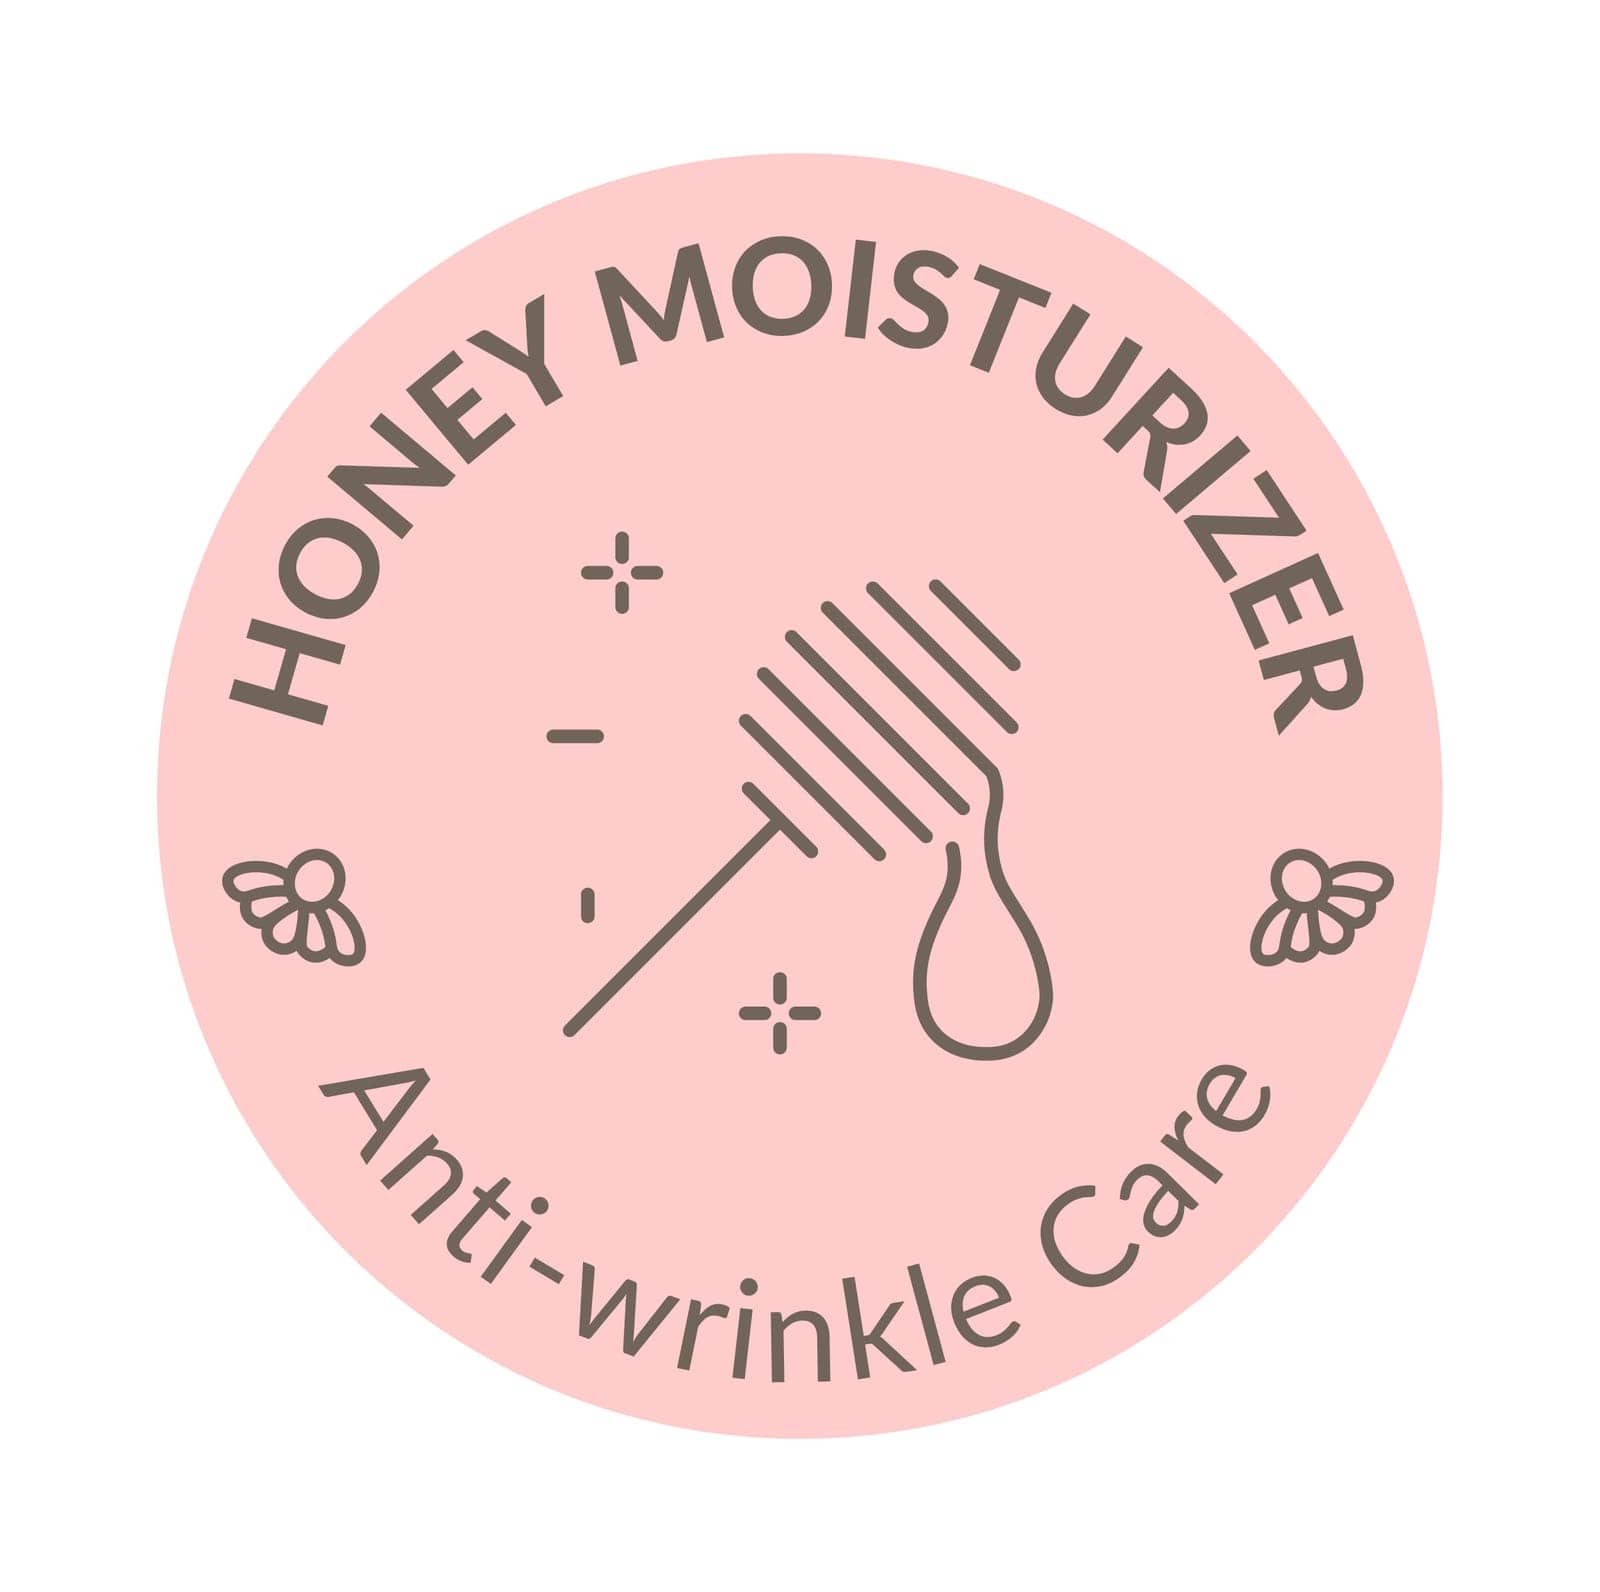 Honey moisturizer anti wrinkle care label logo by Sonulkaster